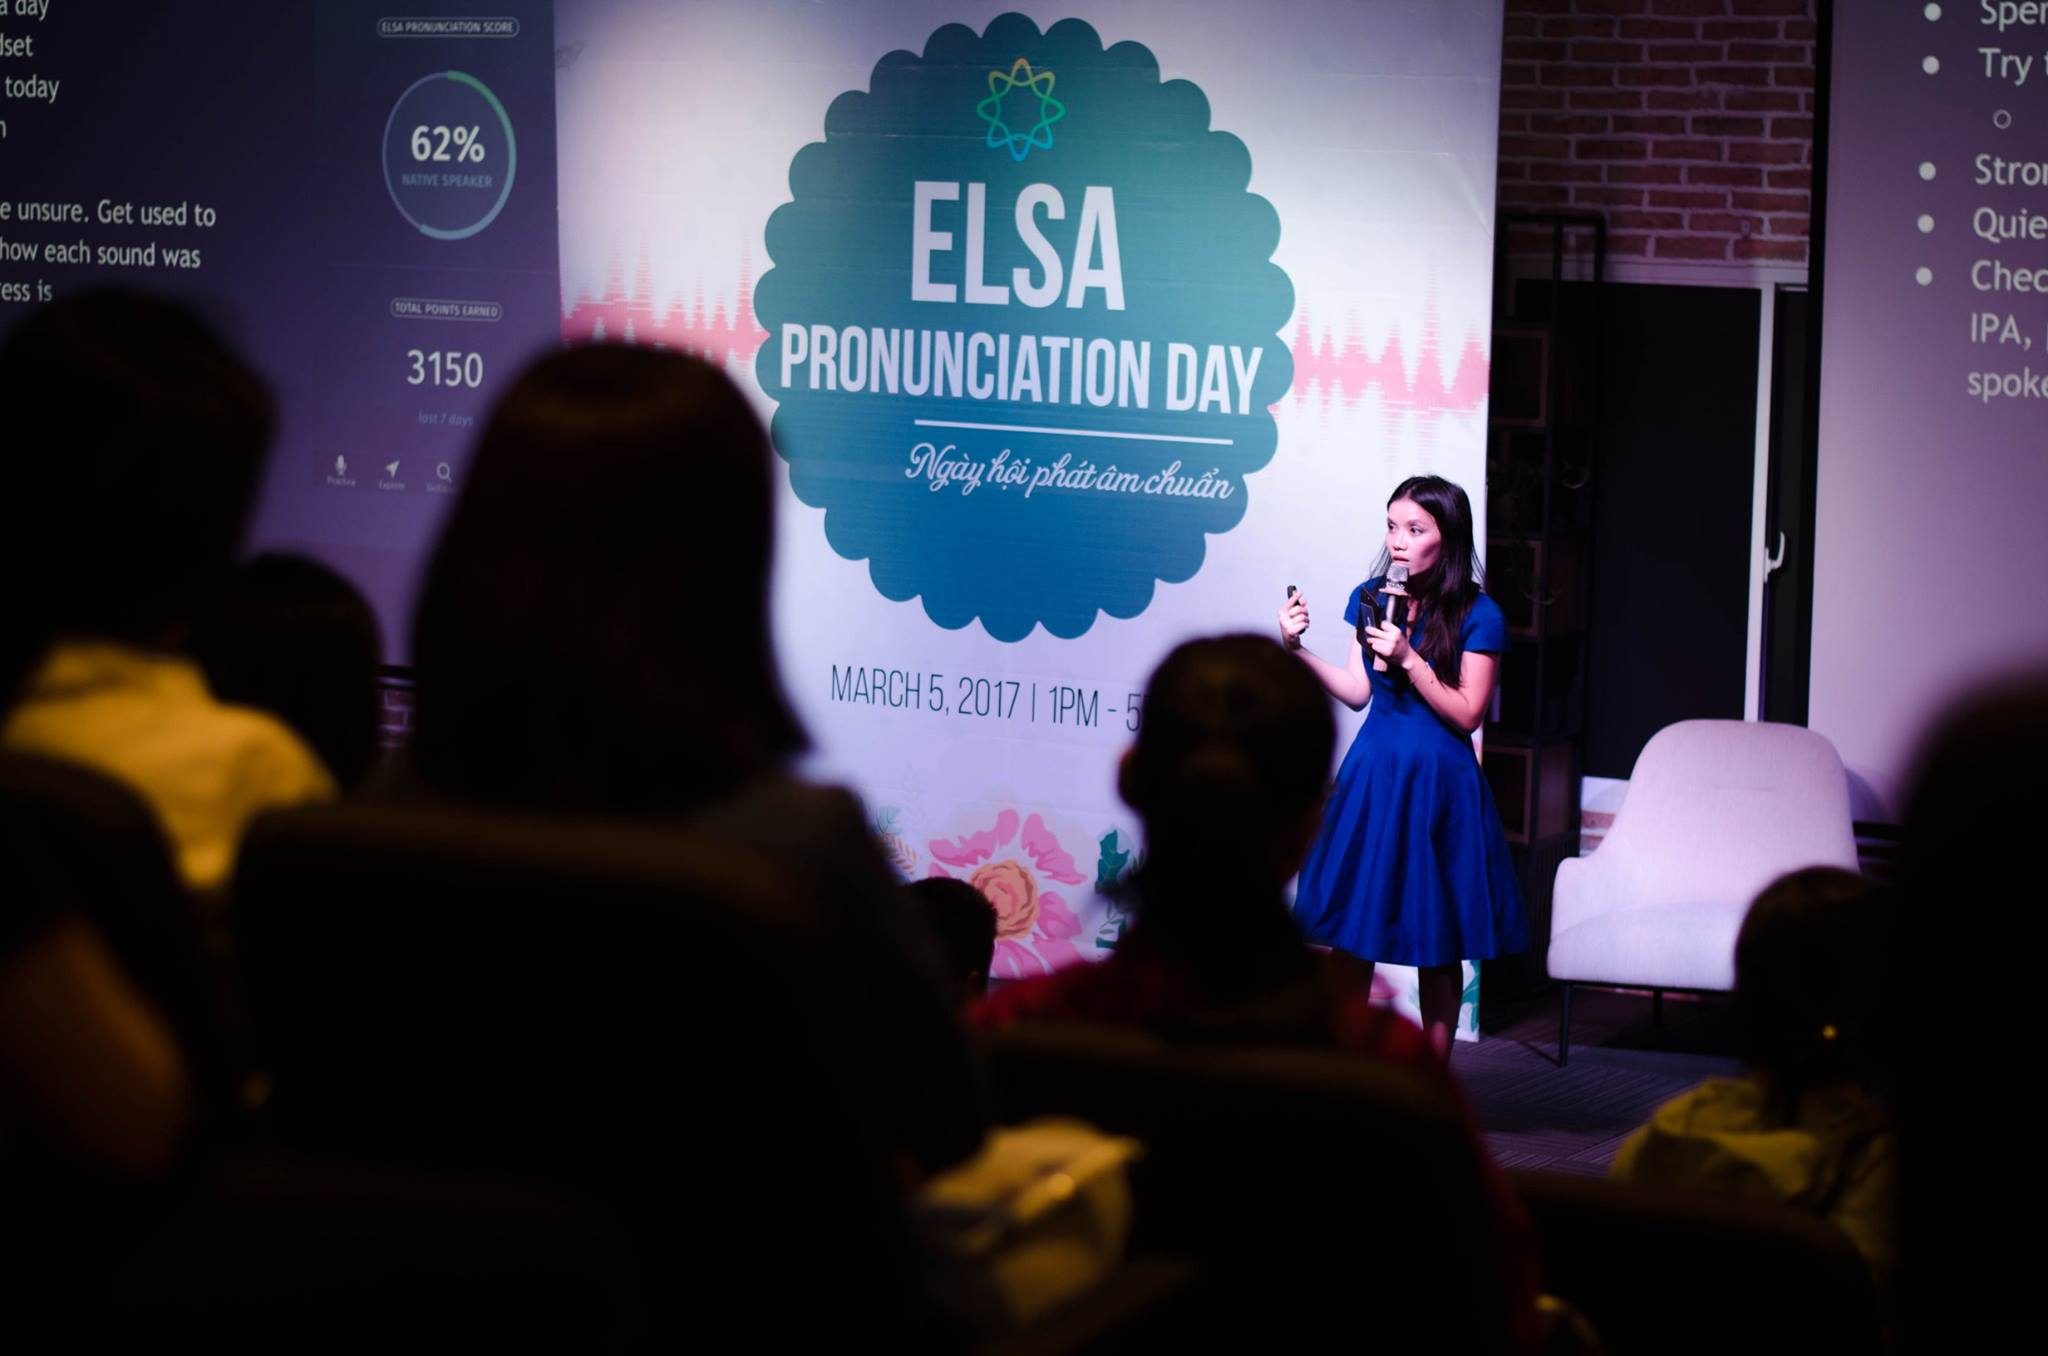 [Updated] Vietnam's English learning app ELSA raises $23m in fresh funding from UOB, existing investors